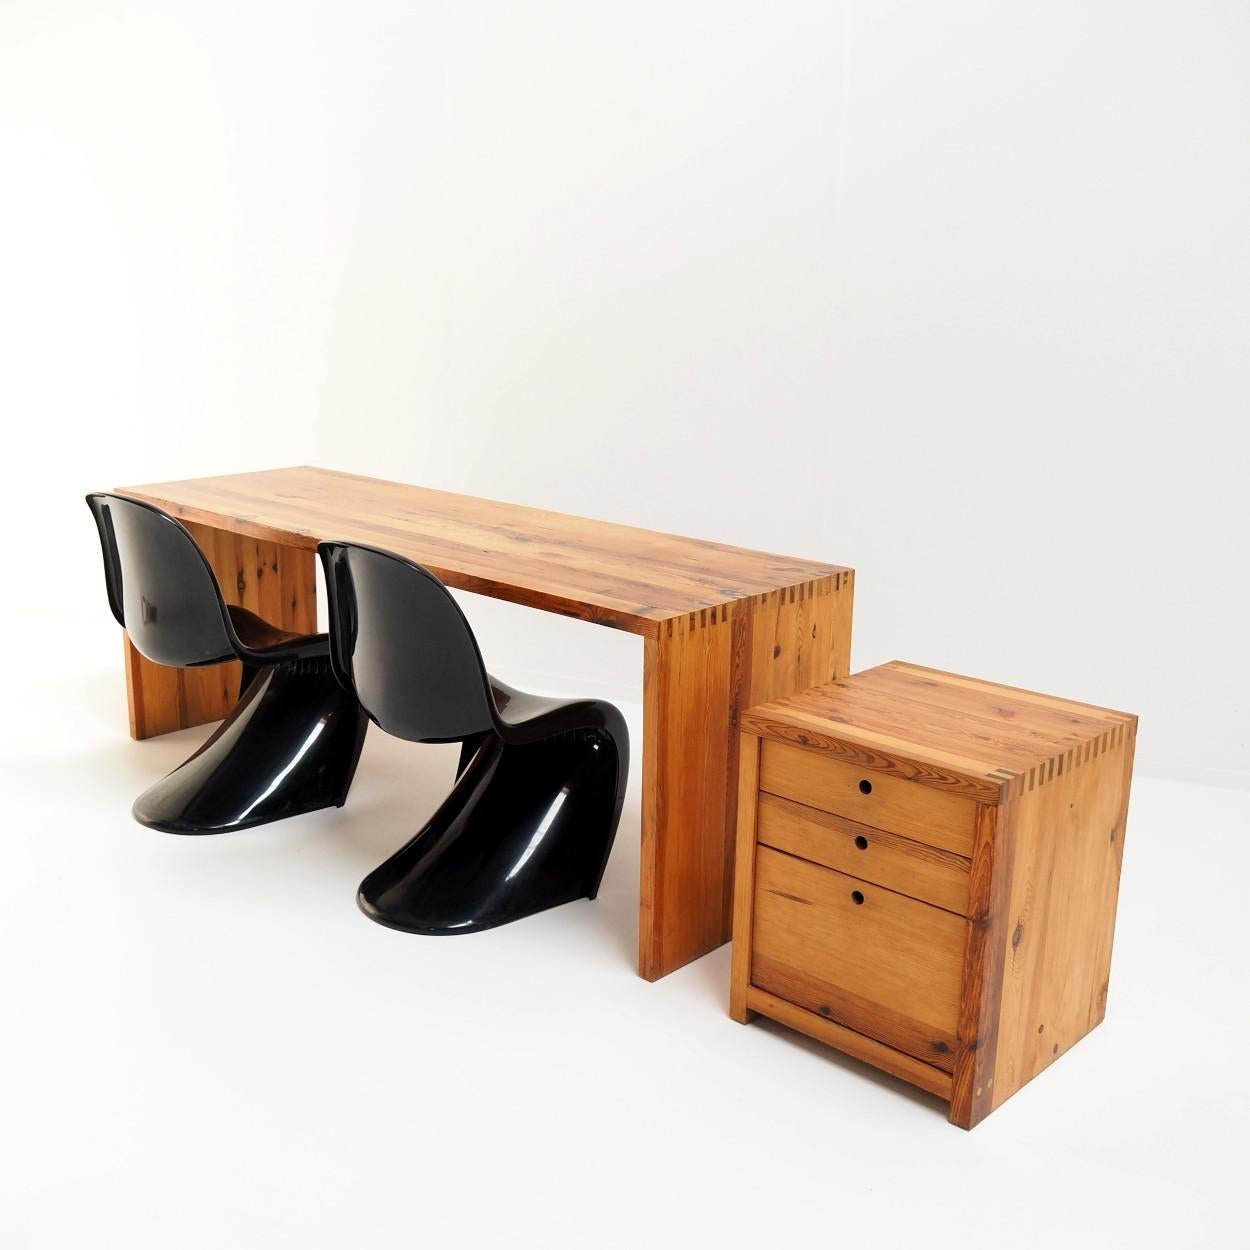 Desk with Drawer Unit in Solid Pine by Dutch Designer Ate Van Apeldoorn For Sale 1